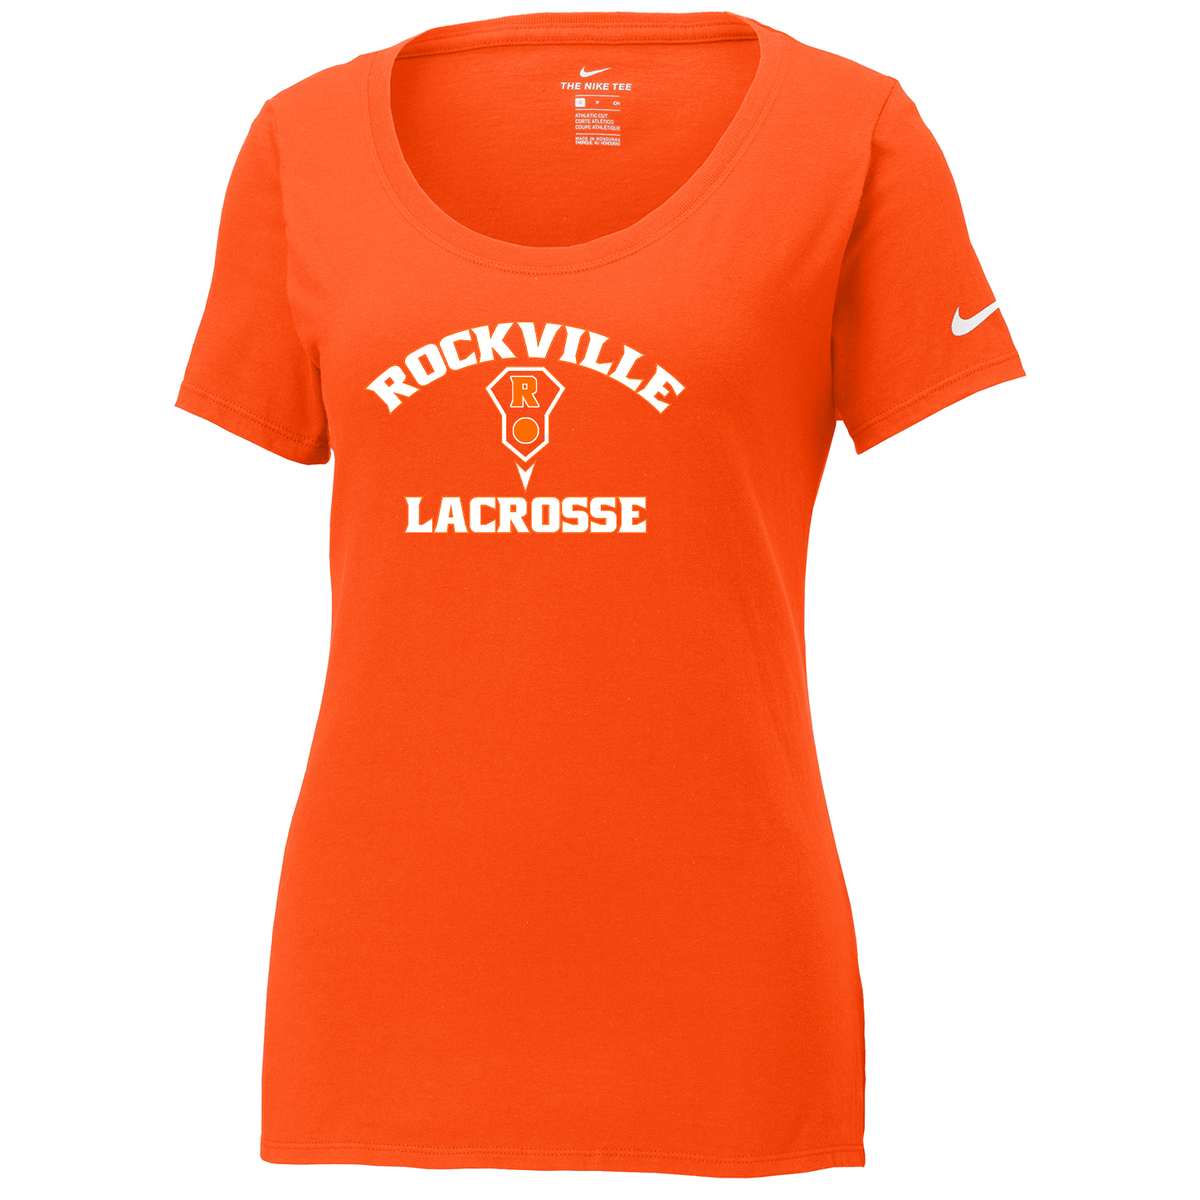 Rockville HS Girls Lacrosse Nike Ladies Core Cotton Tee